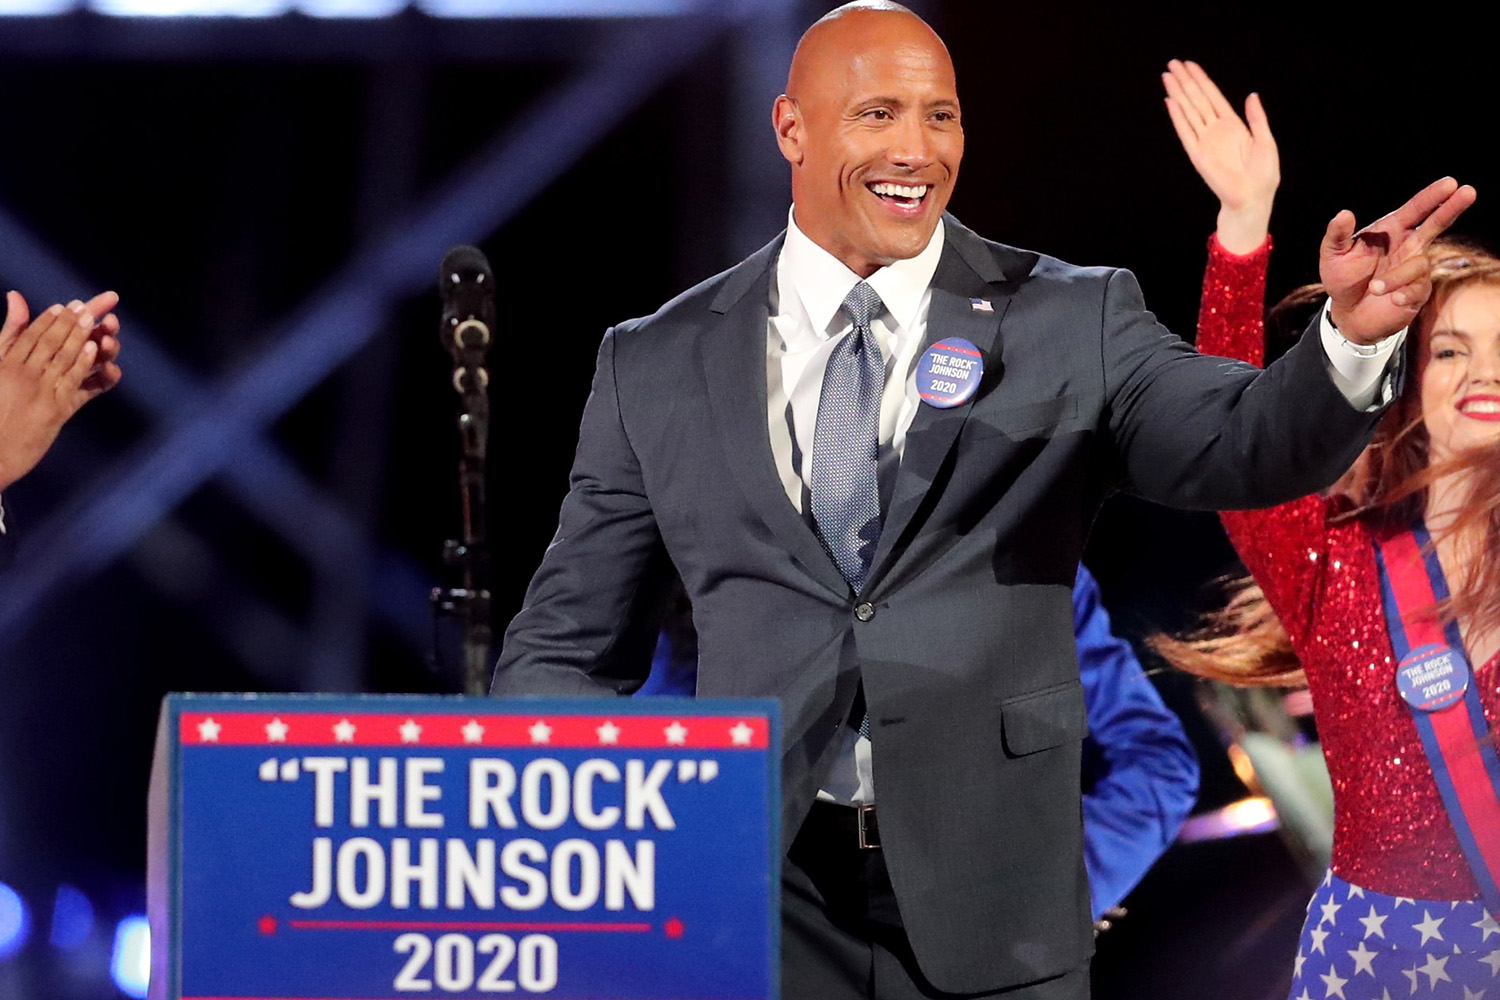 Dwayne 'The Rock' Johnson won't run for president in 2020